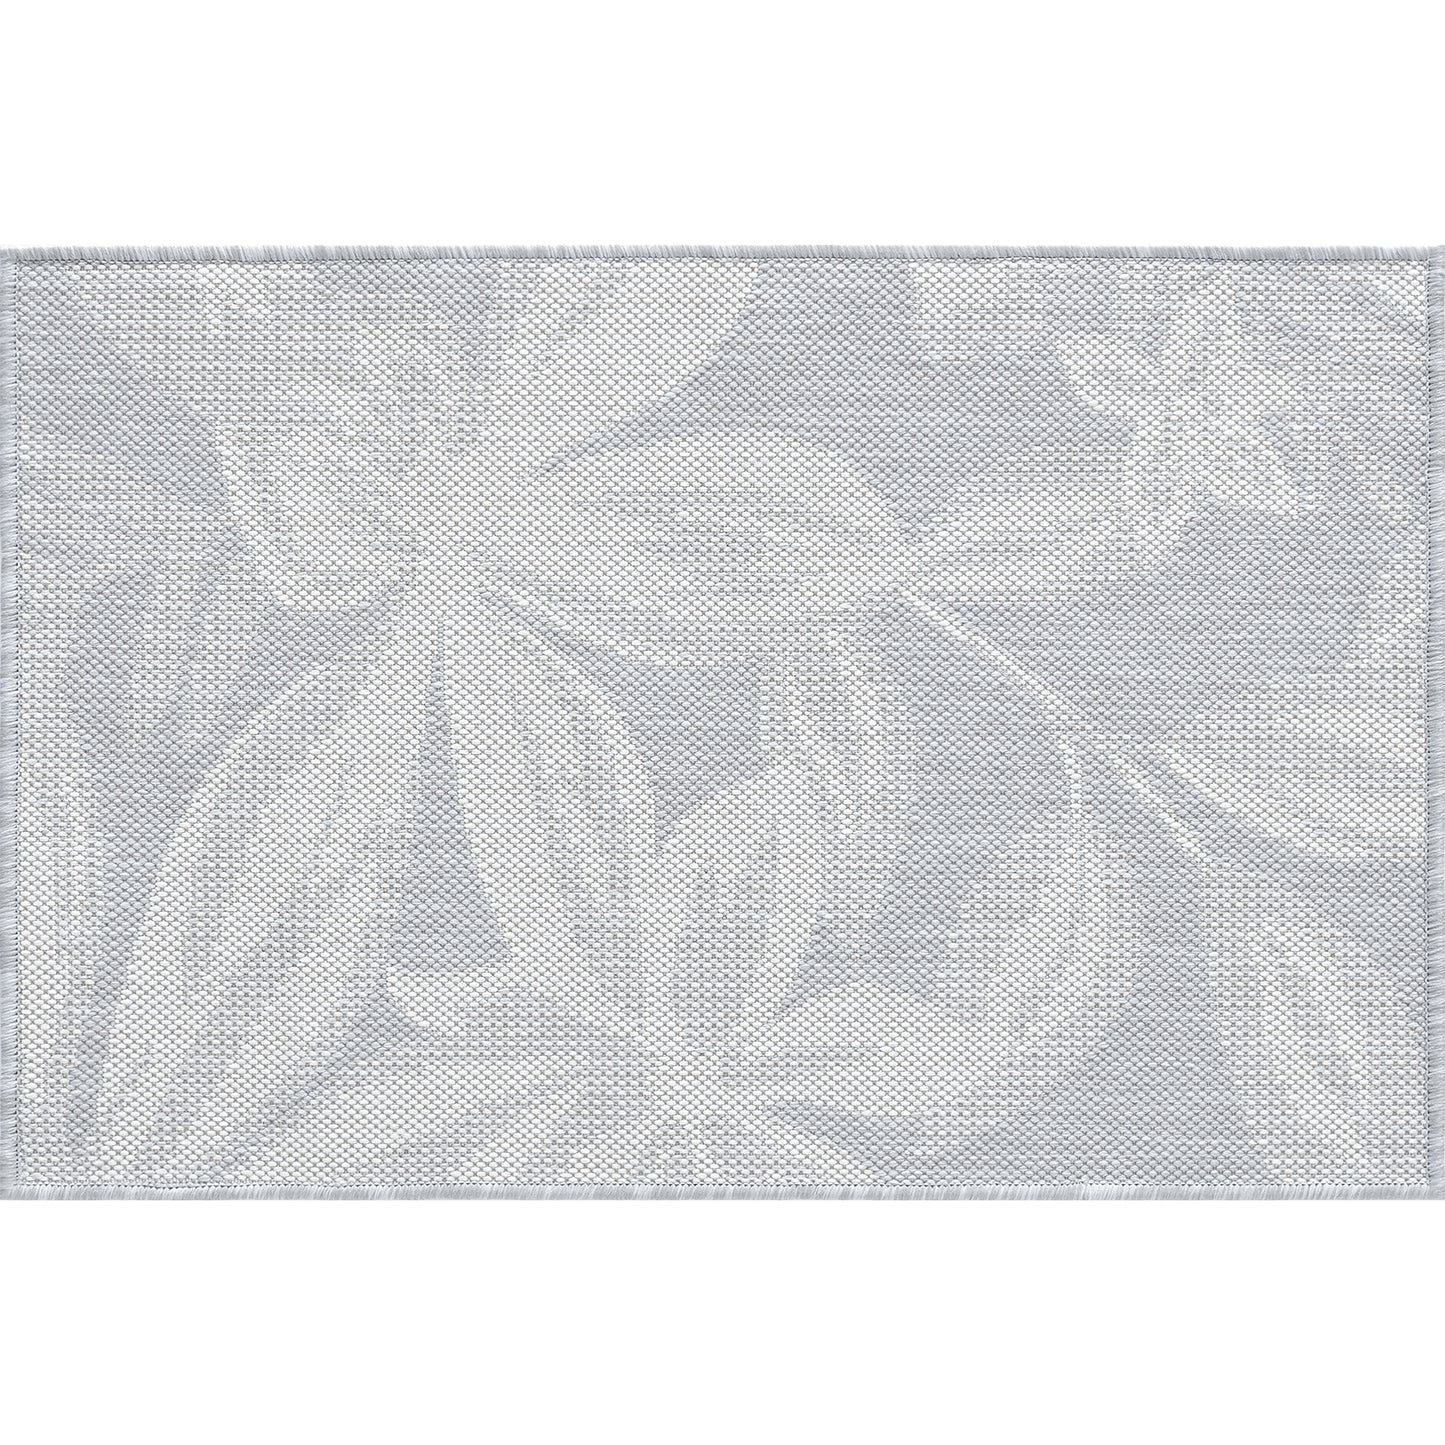 Tayse Floral Area Rug ECO17-Edda Transitional Flat Weave Indoor/Outdoor Polypropylene